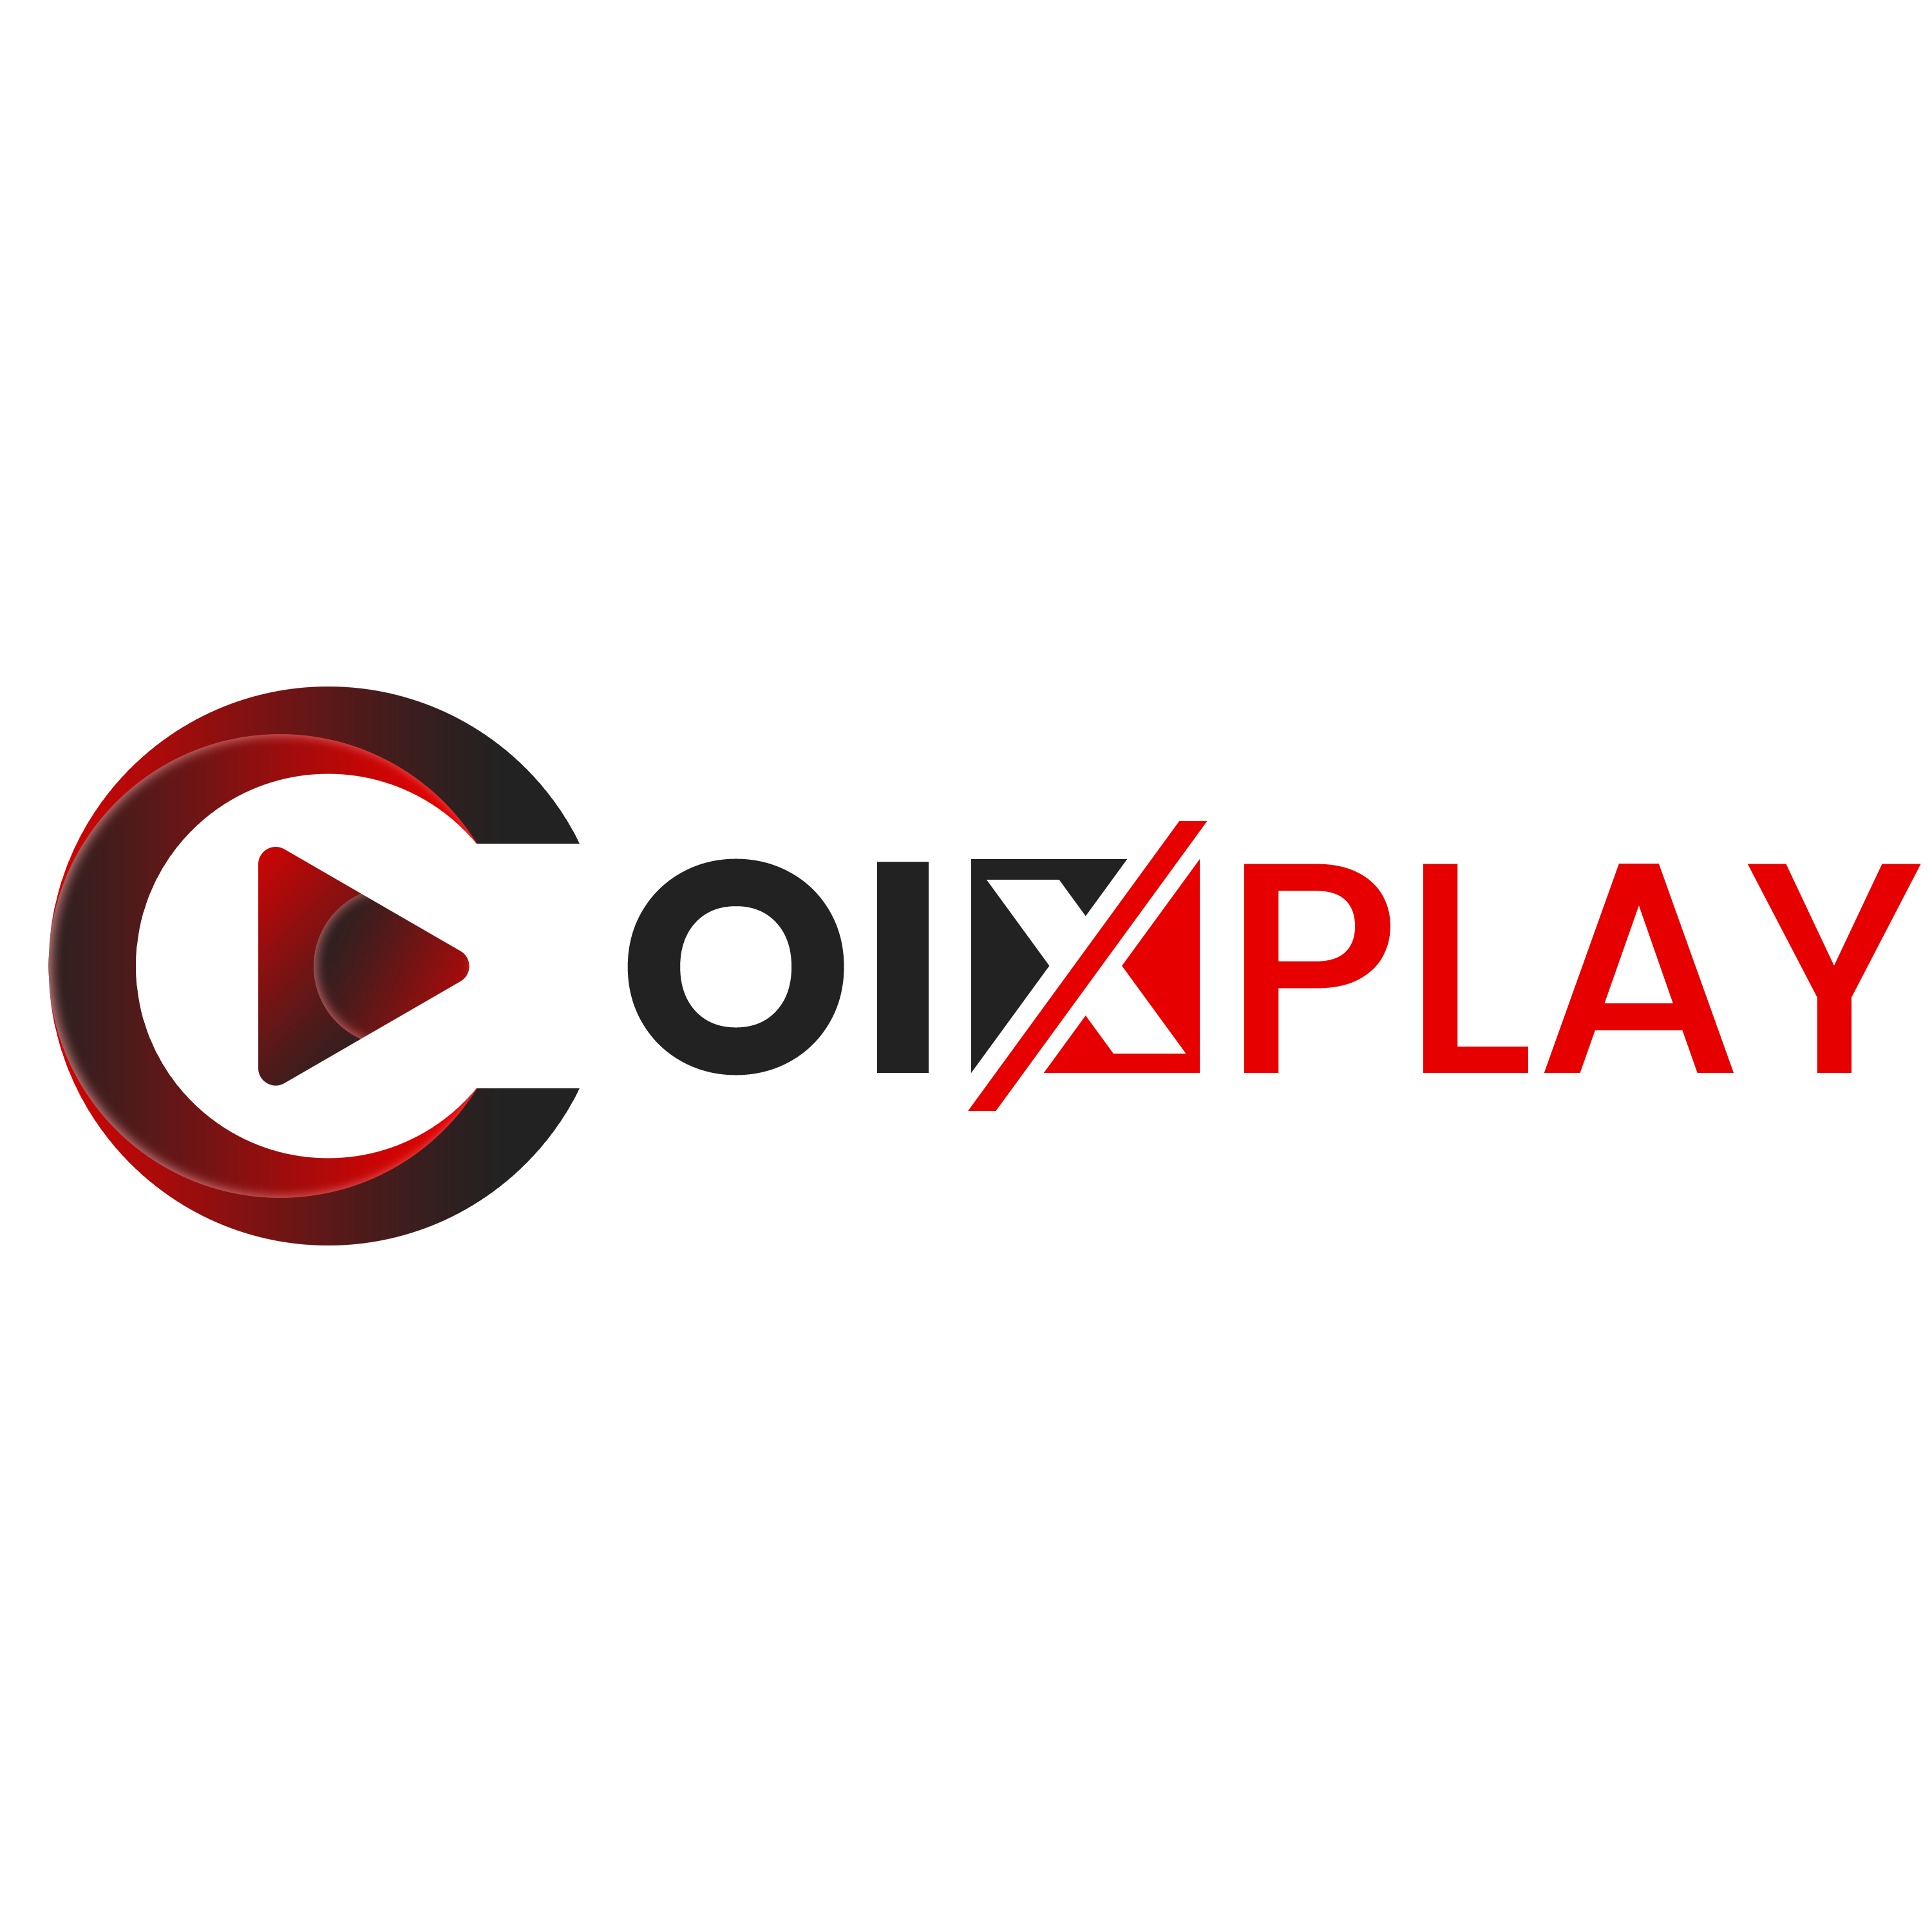 Letters OIX Media Play Logo Design PNG Transparent